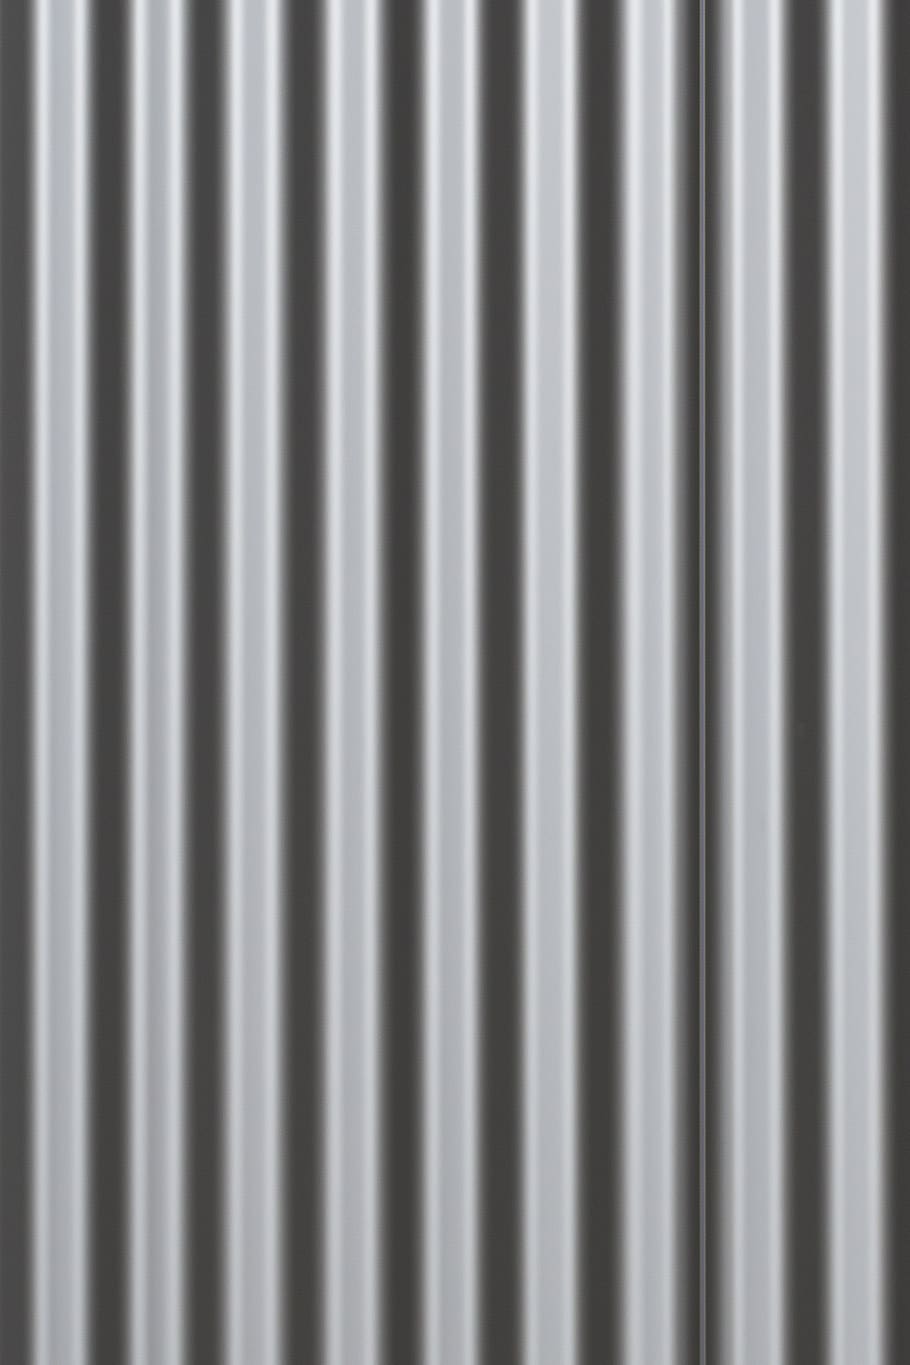 fachada, hoja de perfil, perfil de onda sinusoidal, aluminio, placa corrugada, hoja corrugada, fondo, patrón, textura, metal